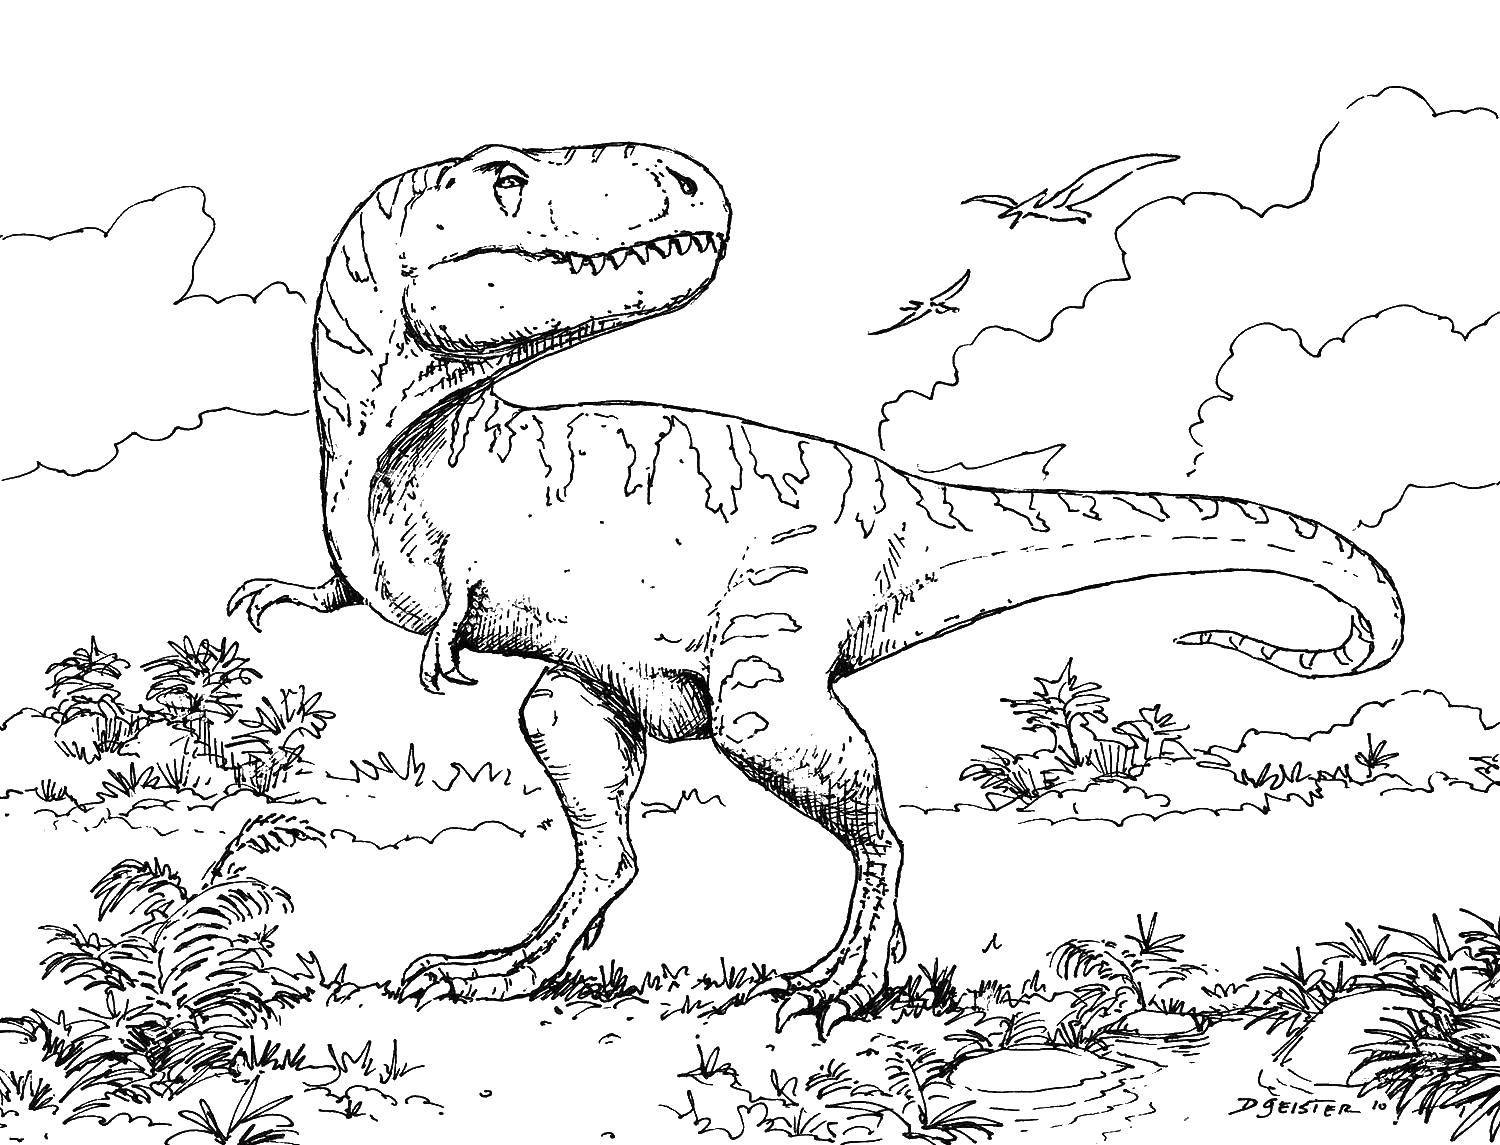 Coloring Dinosaur. Category Jurassic Park. Tags:  dinosaur, nature, dinosaurs.